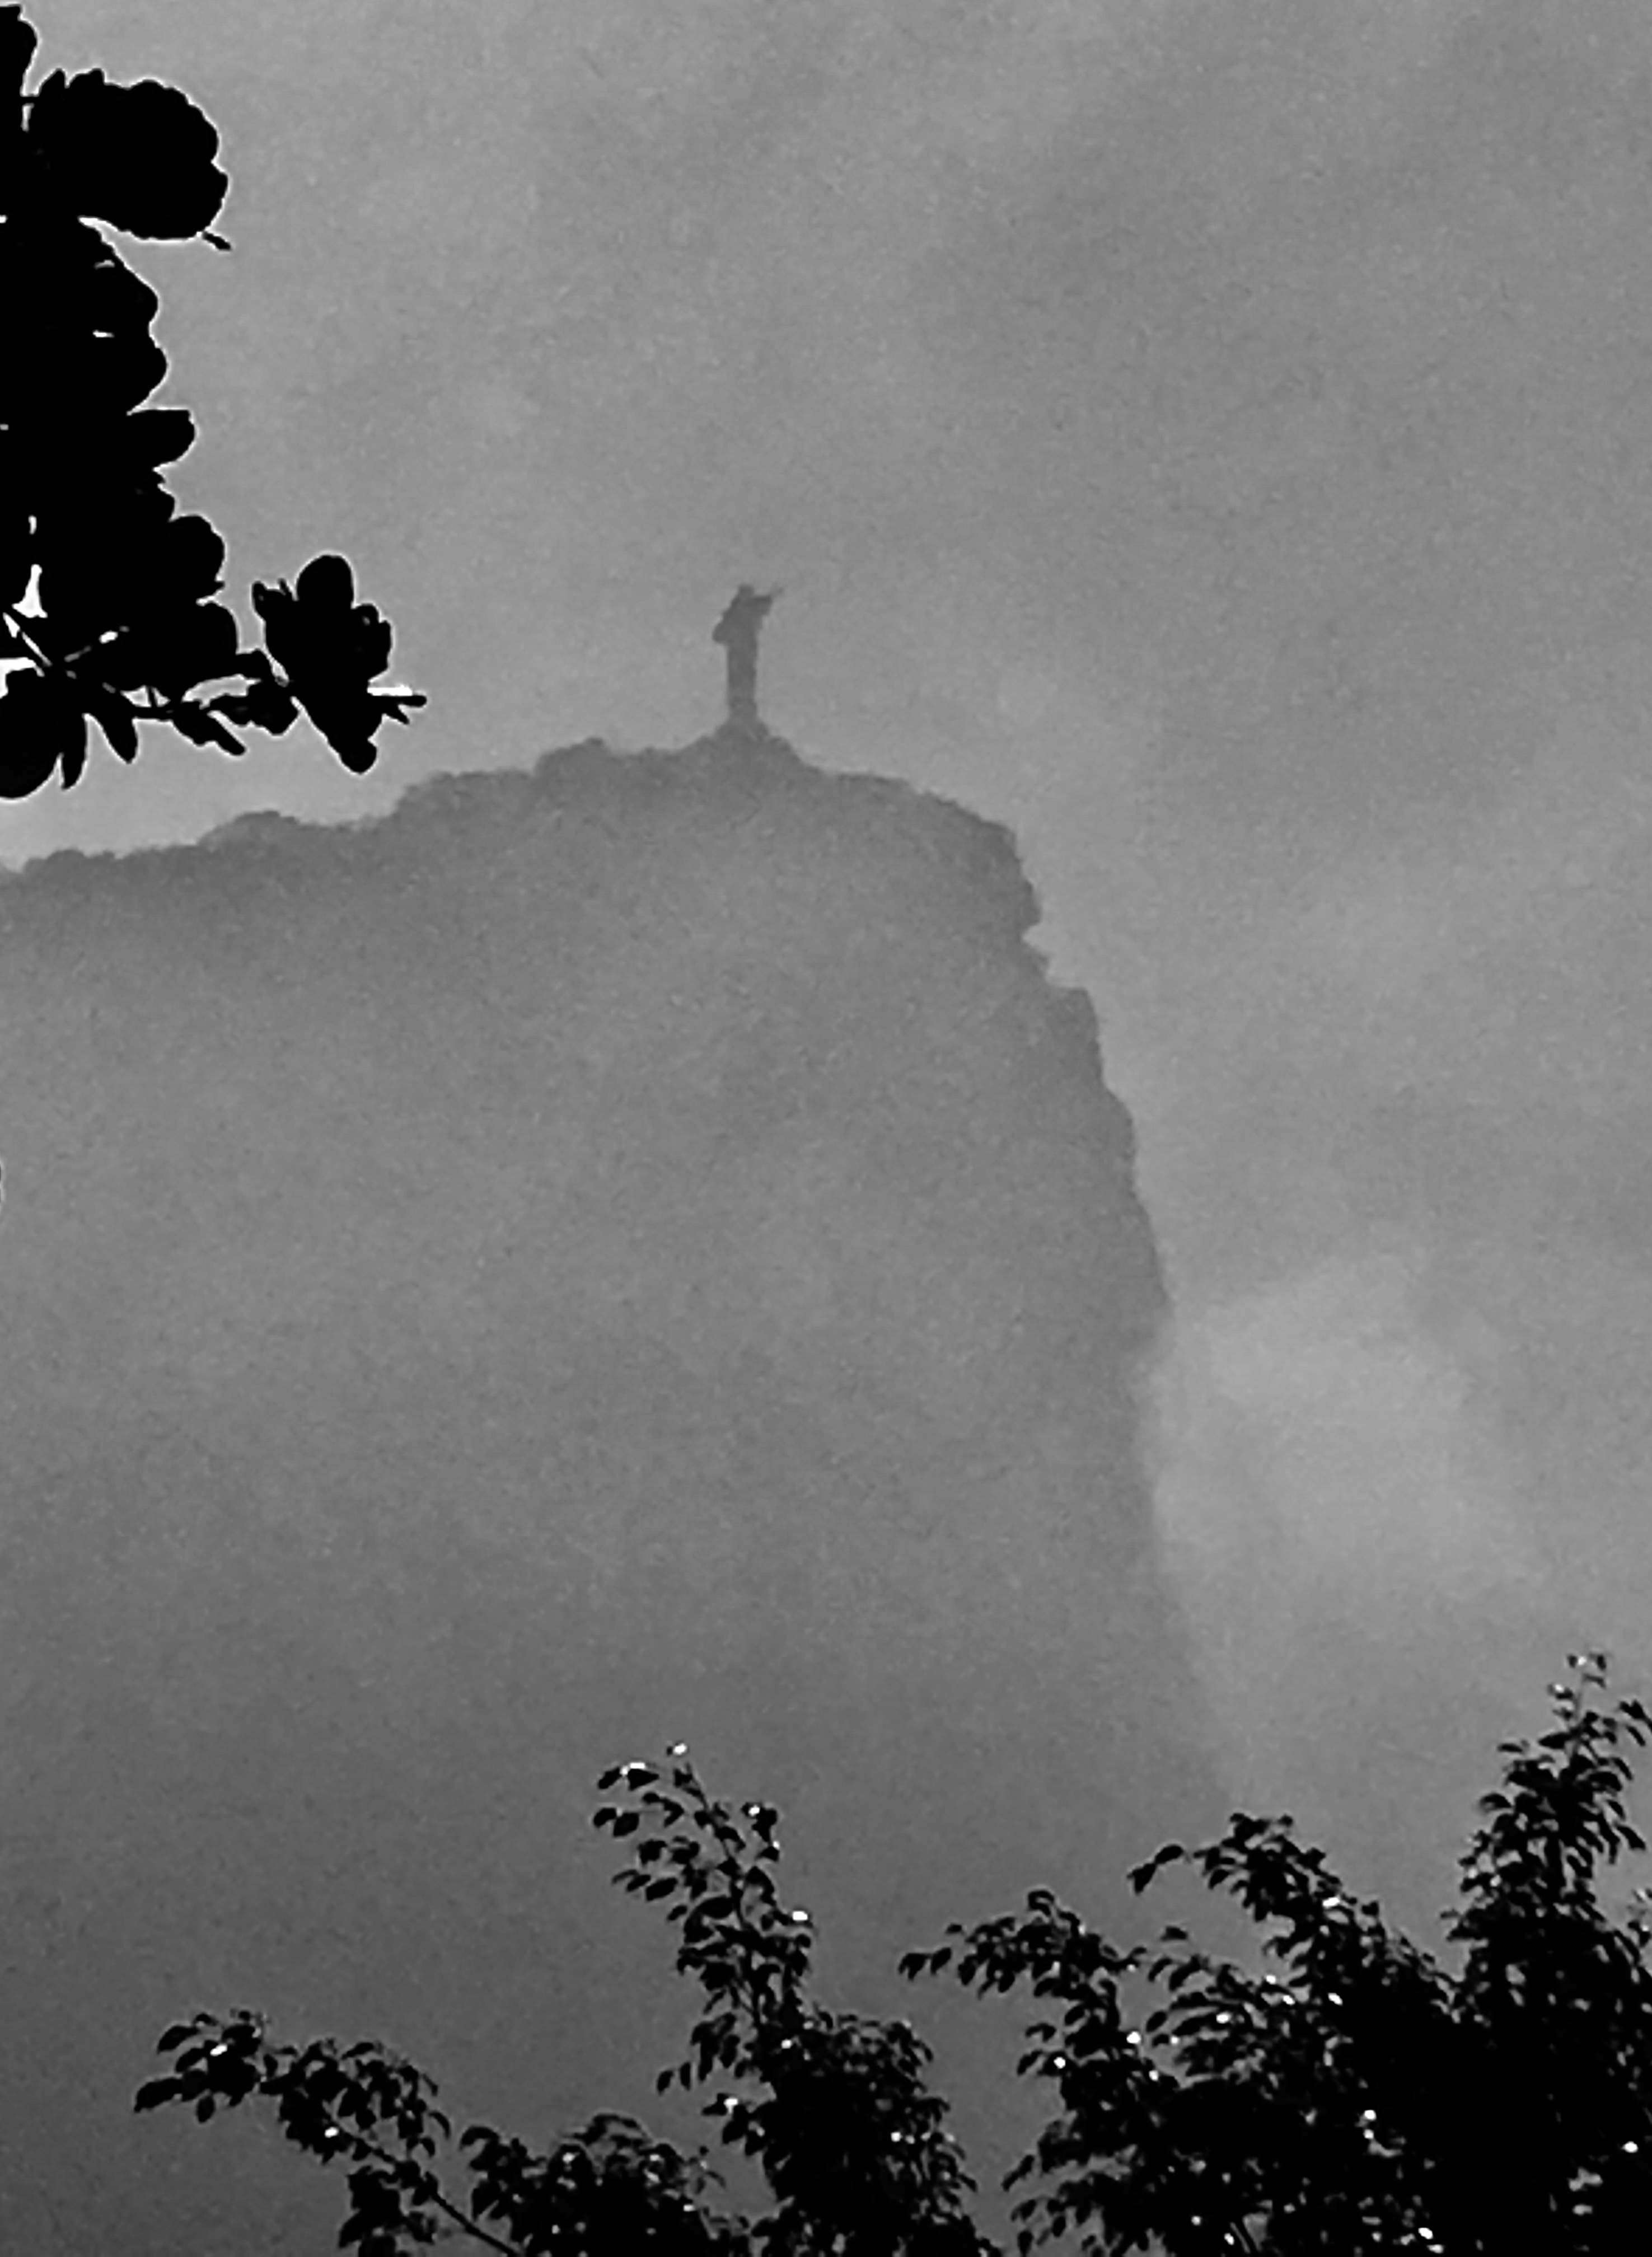 Cristo Redentor rises up through the mist, Rio de Janeiro, Brazil